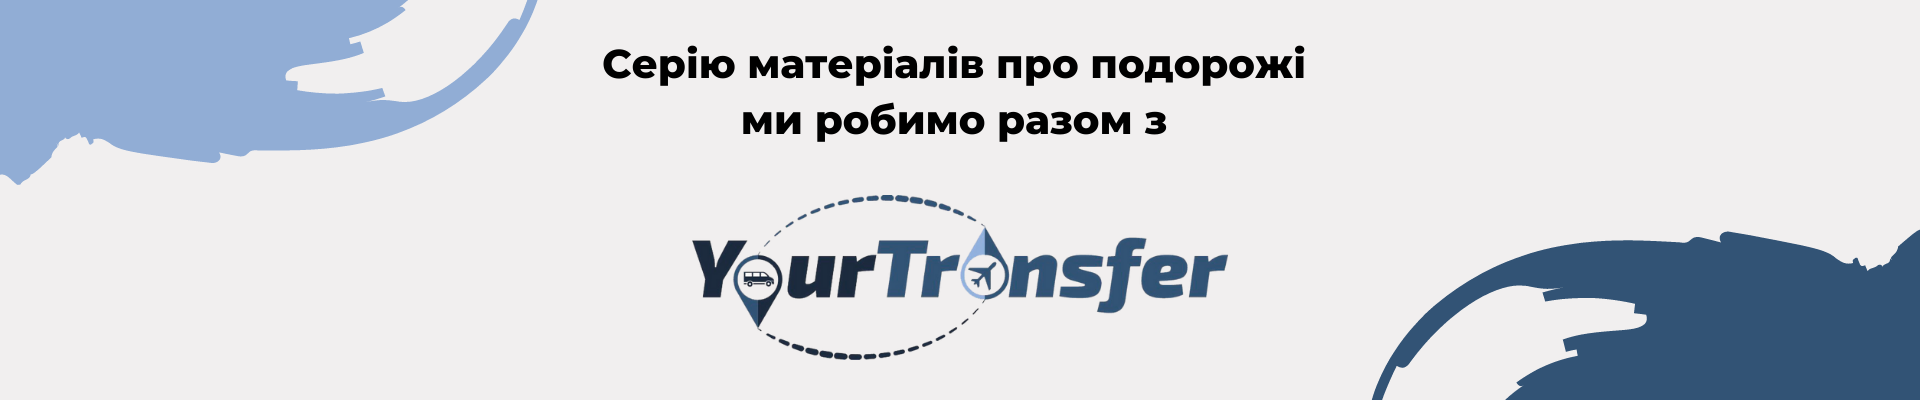 Yourtransfer подорожі